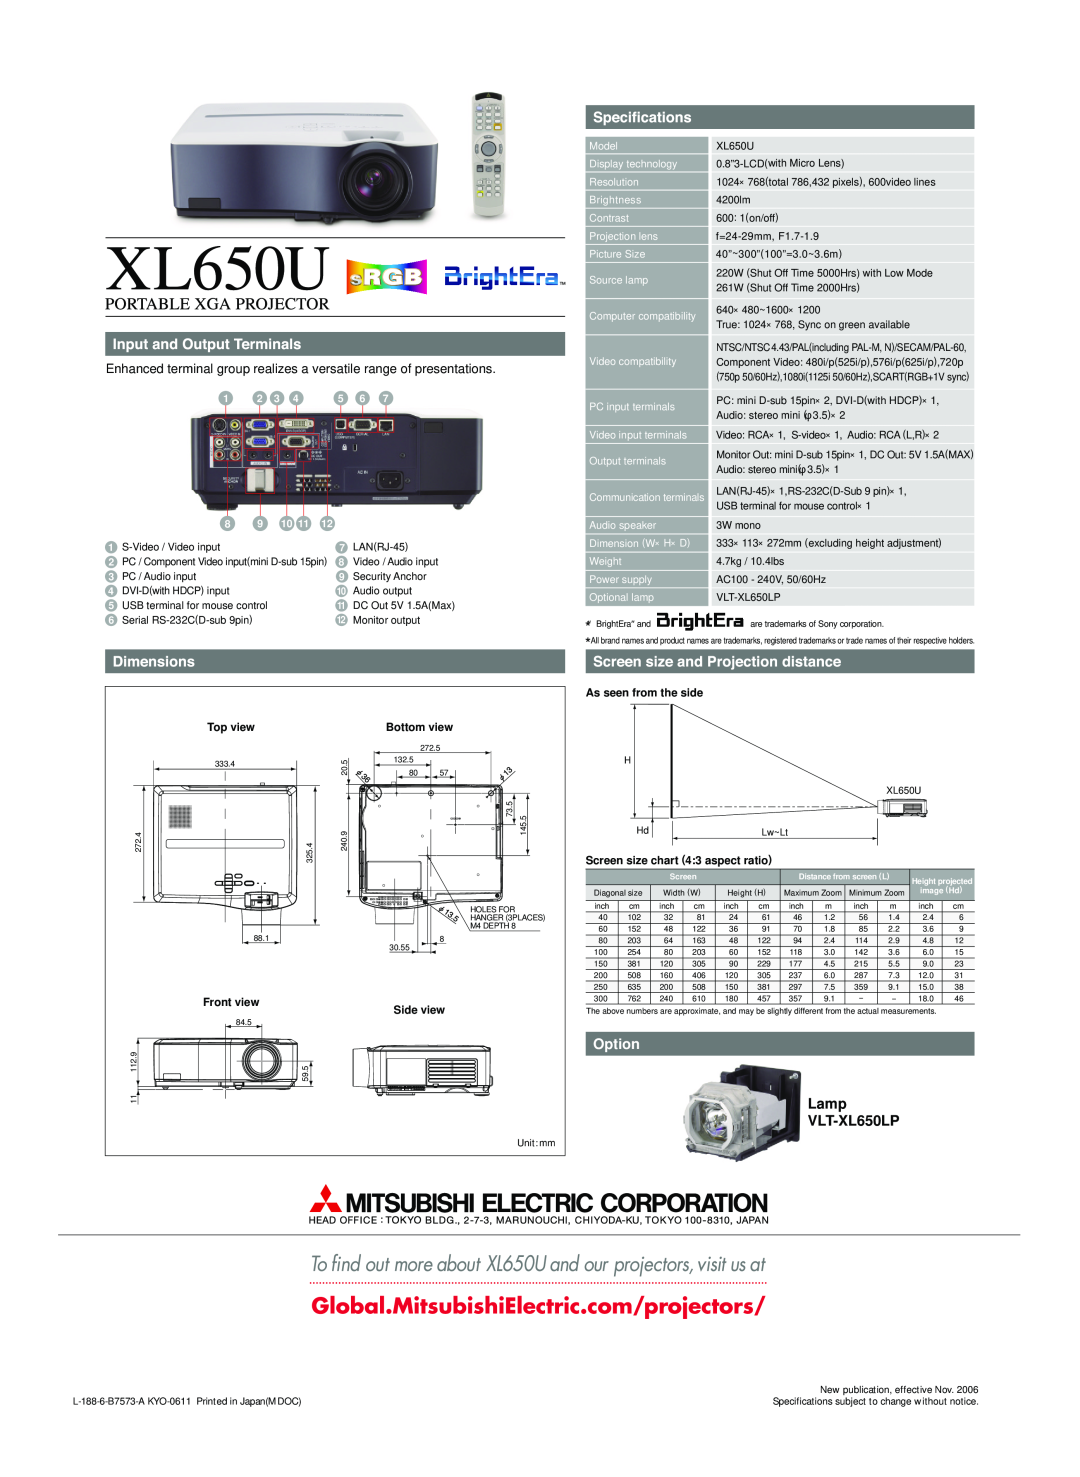 Mitsubishi Electronics VLT-XL650LP Enhanced terminal group realizes a versatile range of presentations, Option, Side view 